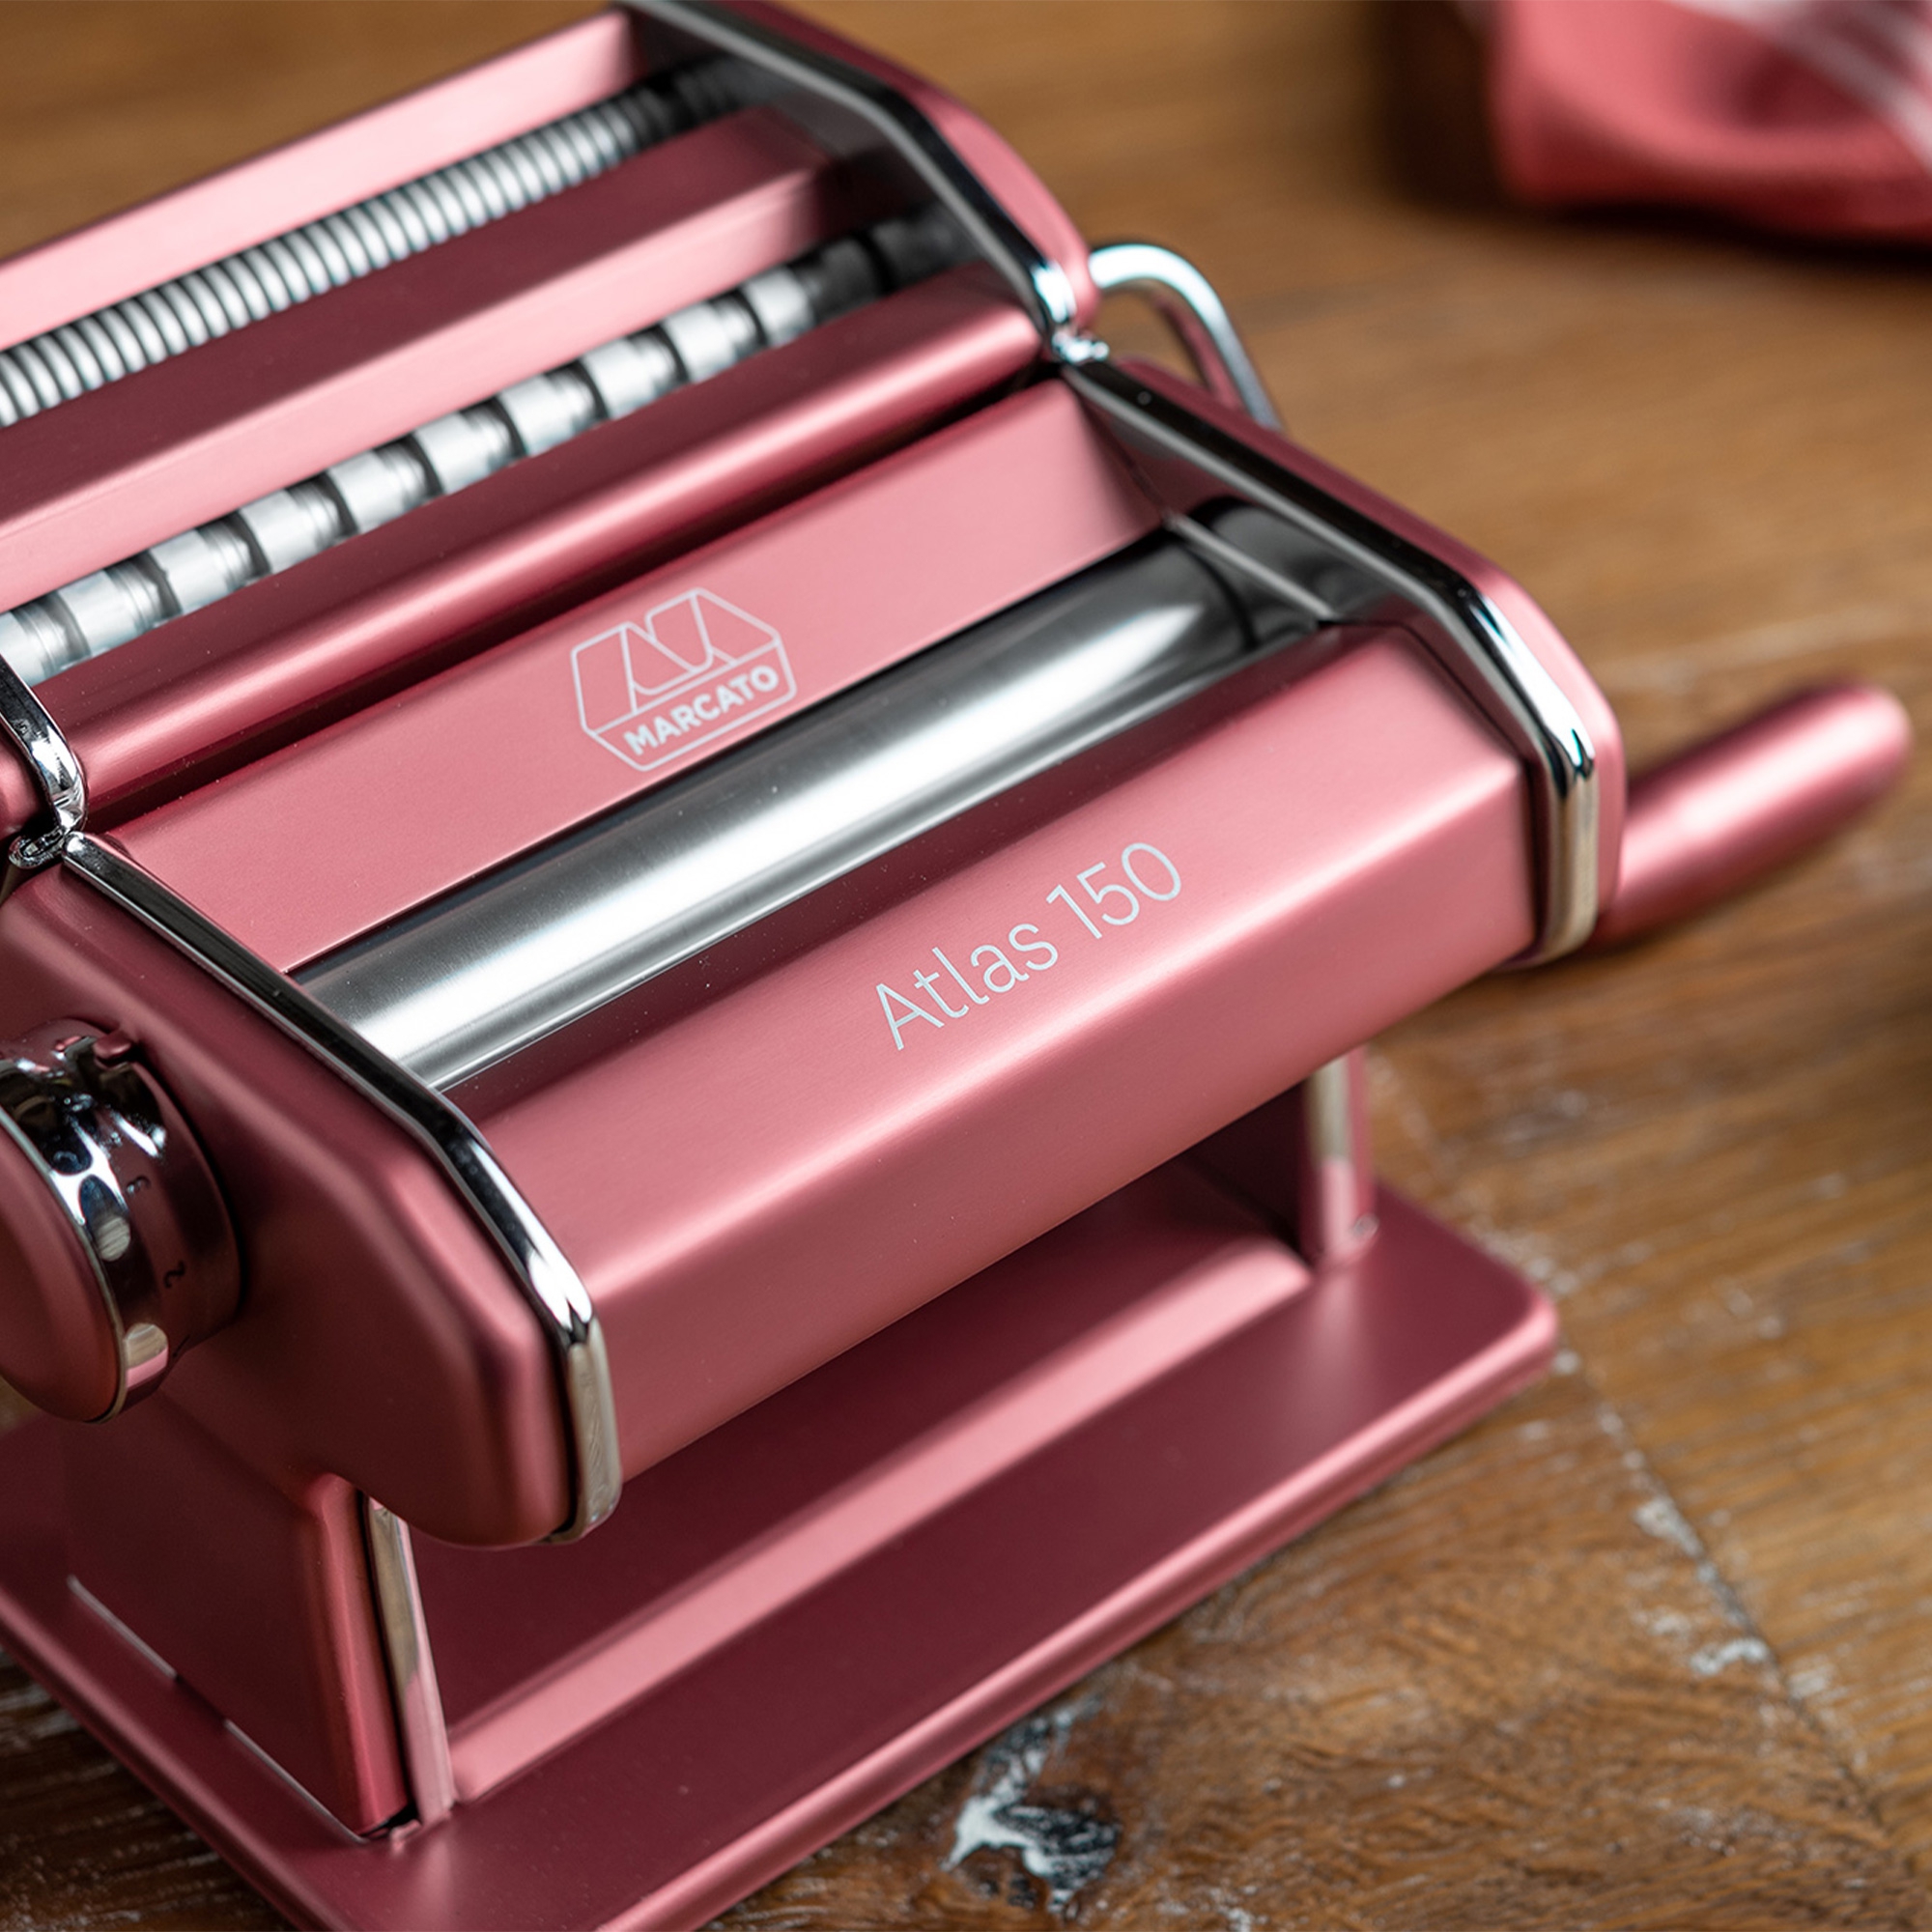 Marcato - Nudelmaschine "Atlas 150 Design" Pink